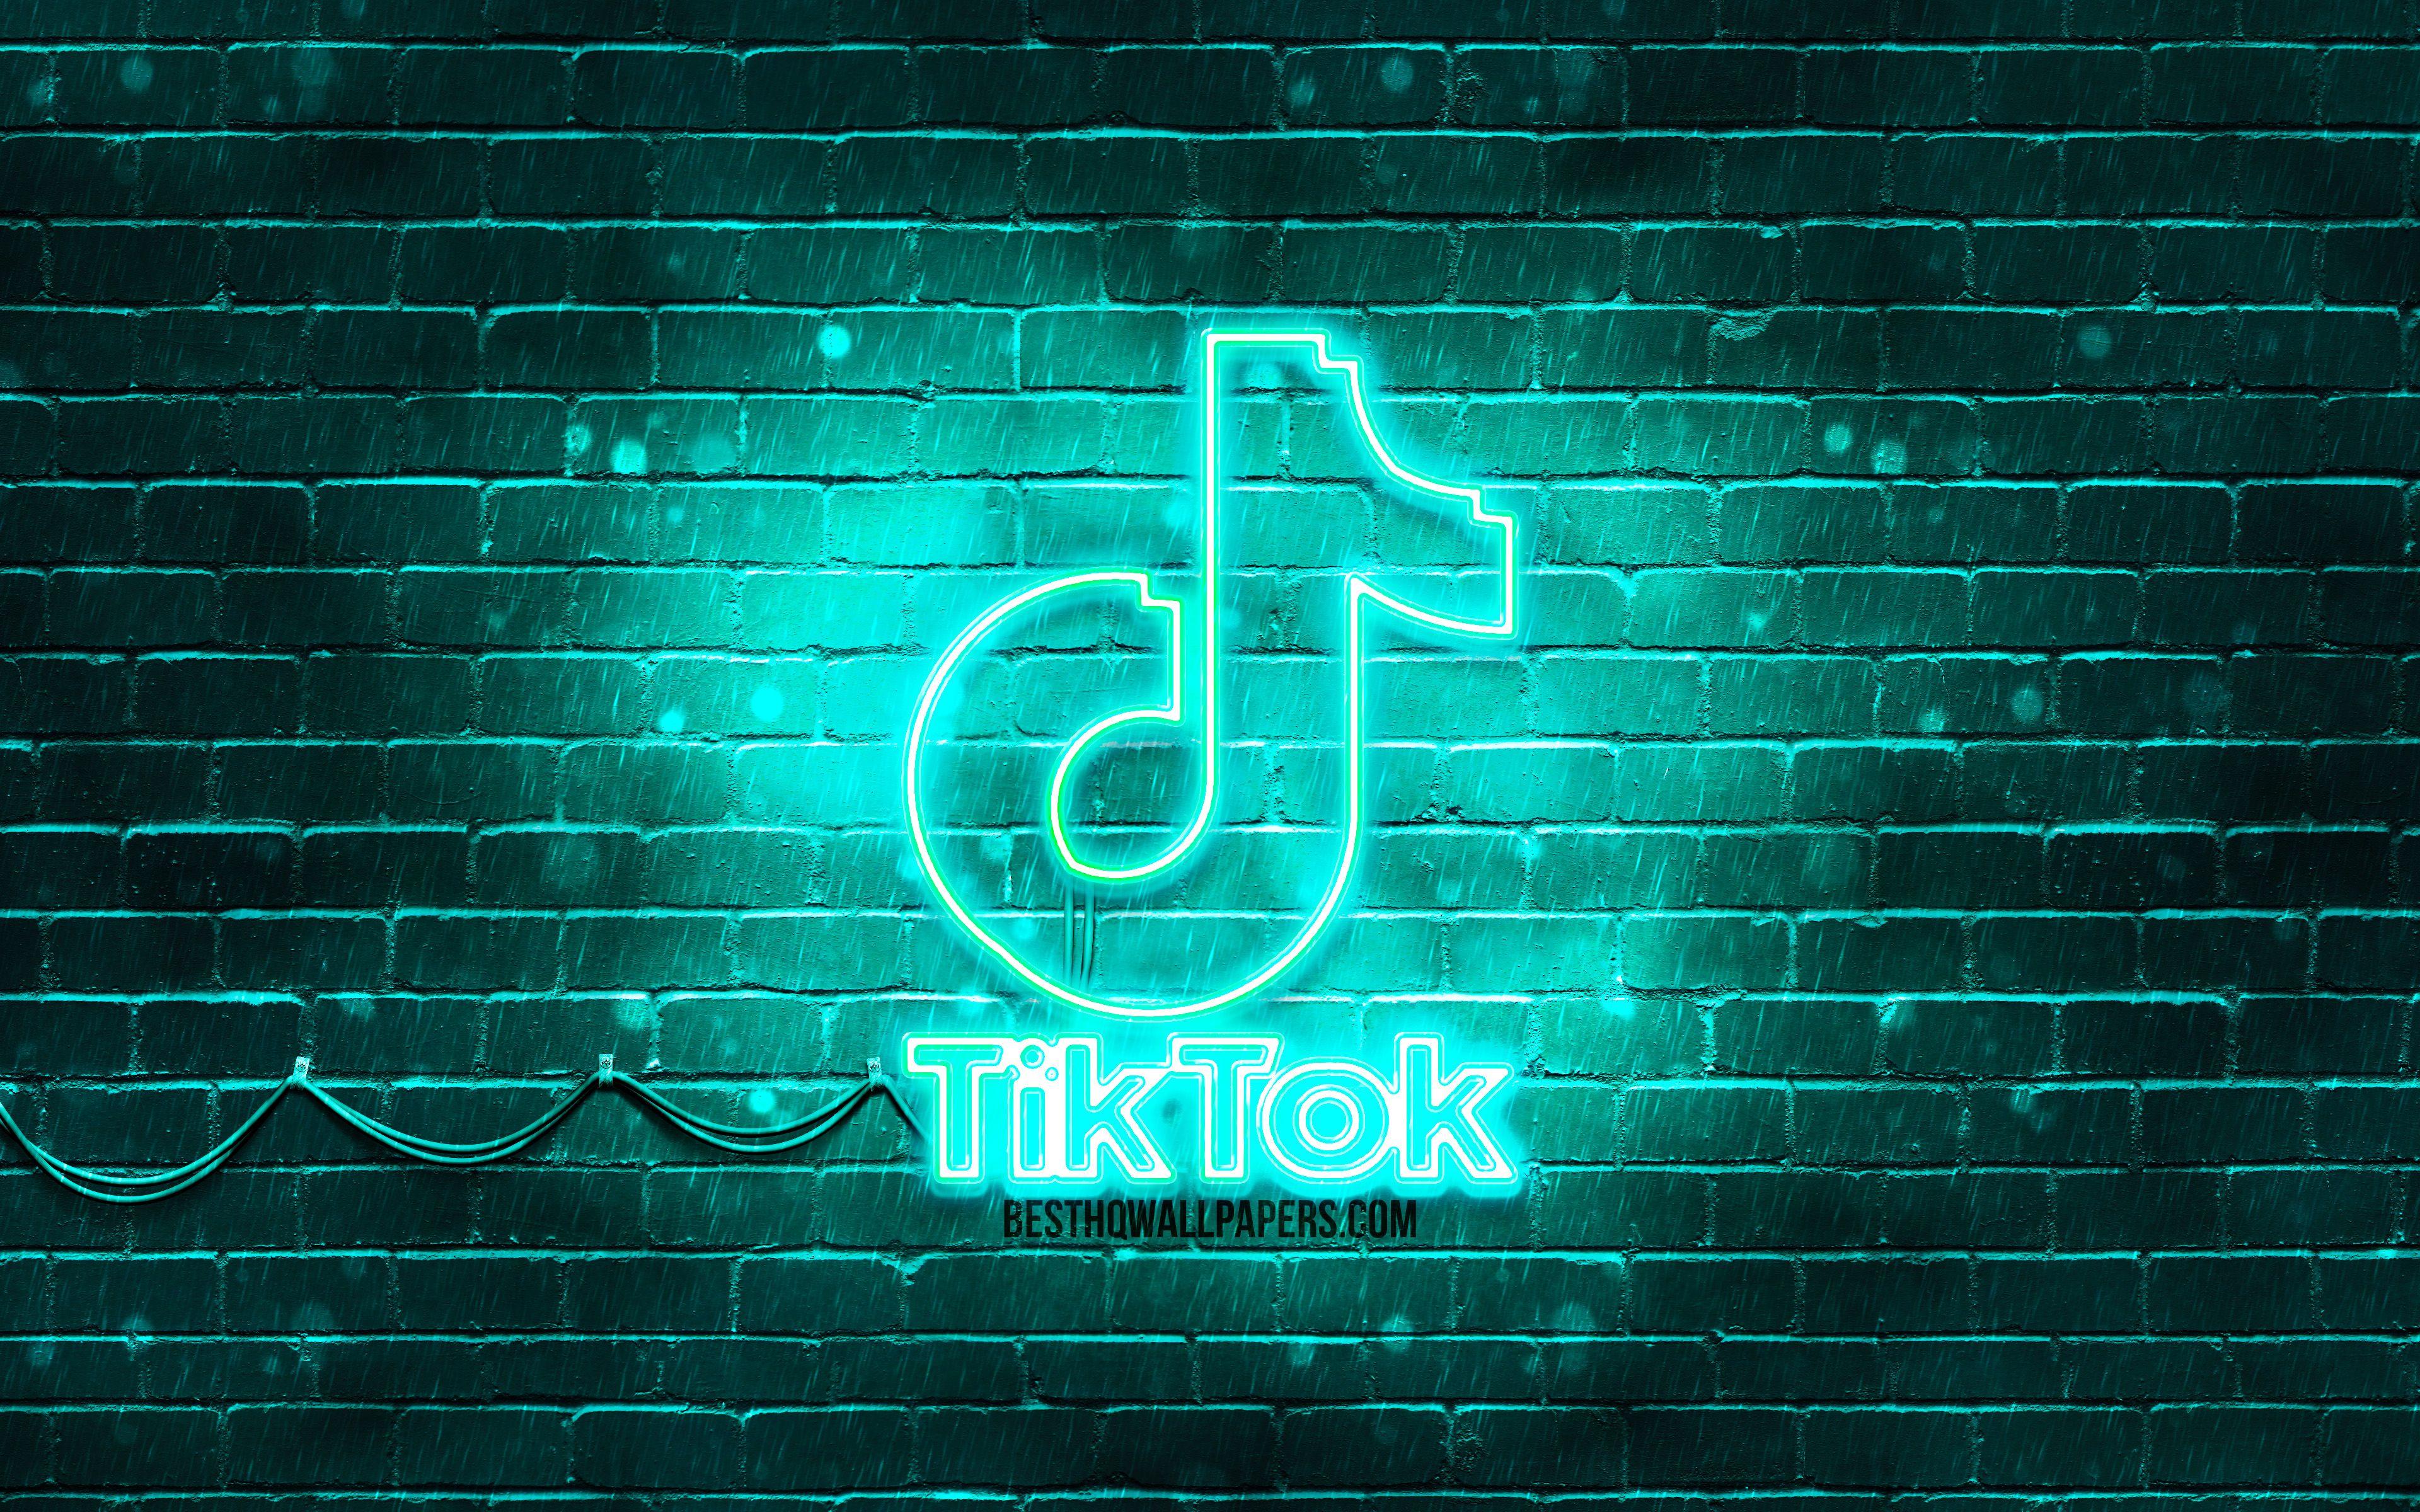 Tiktok logo wallpaper - grekids